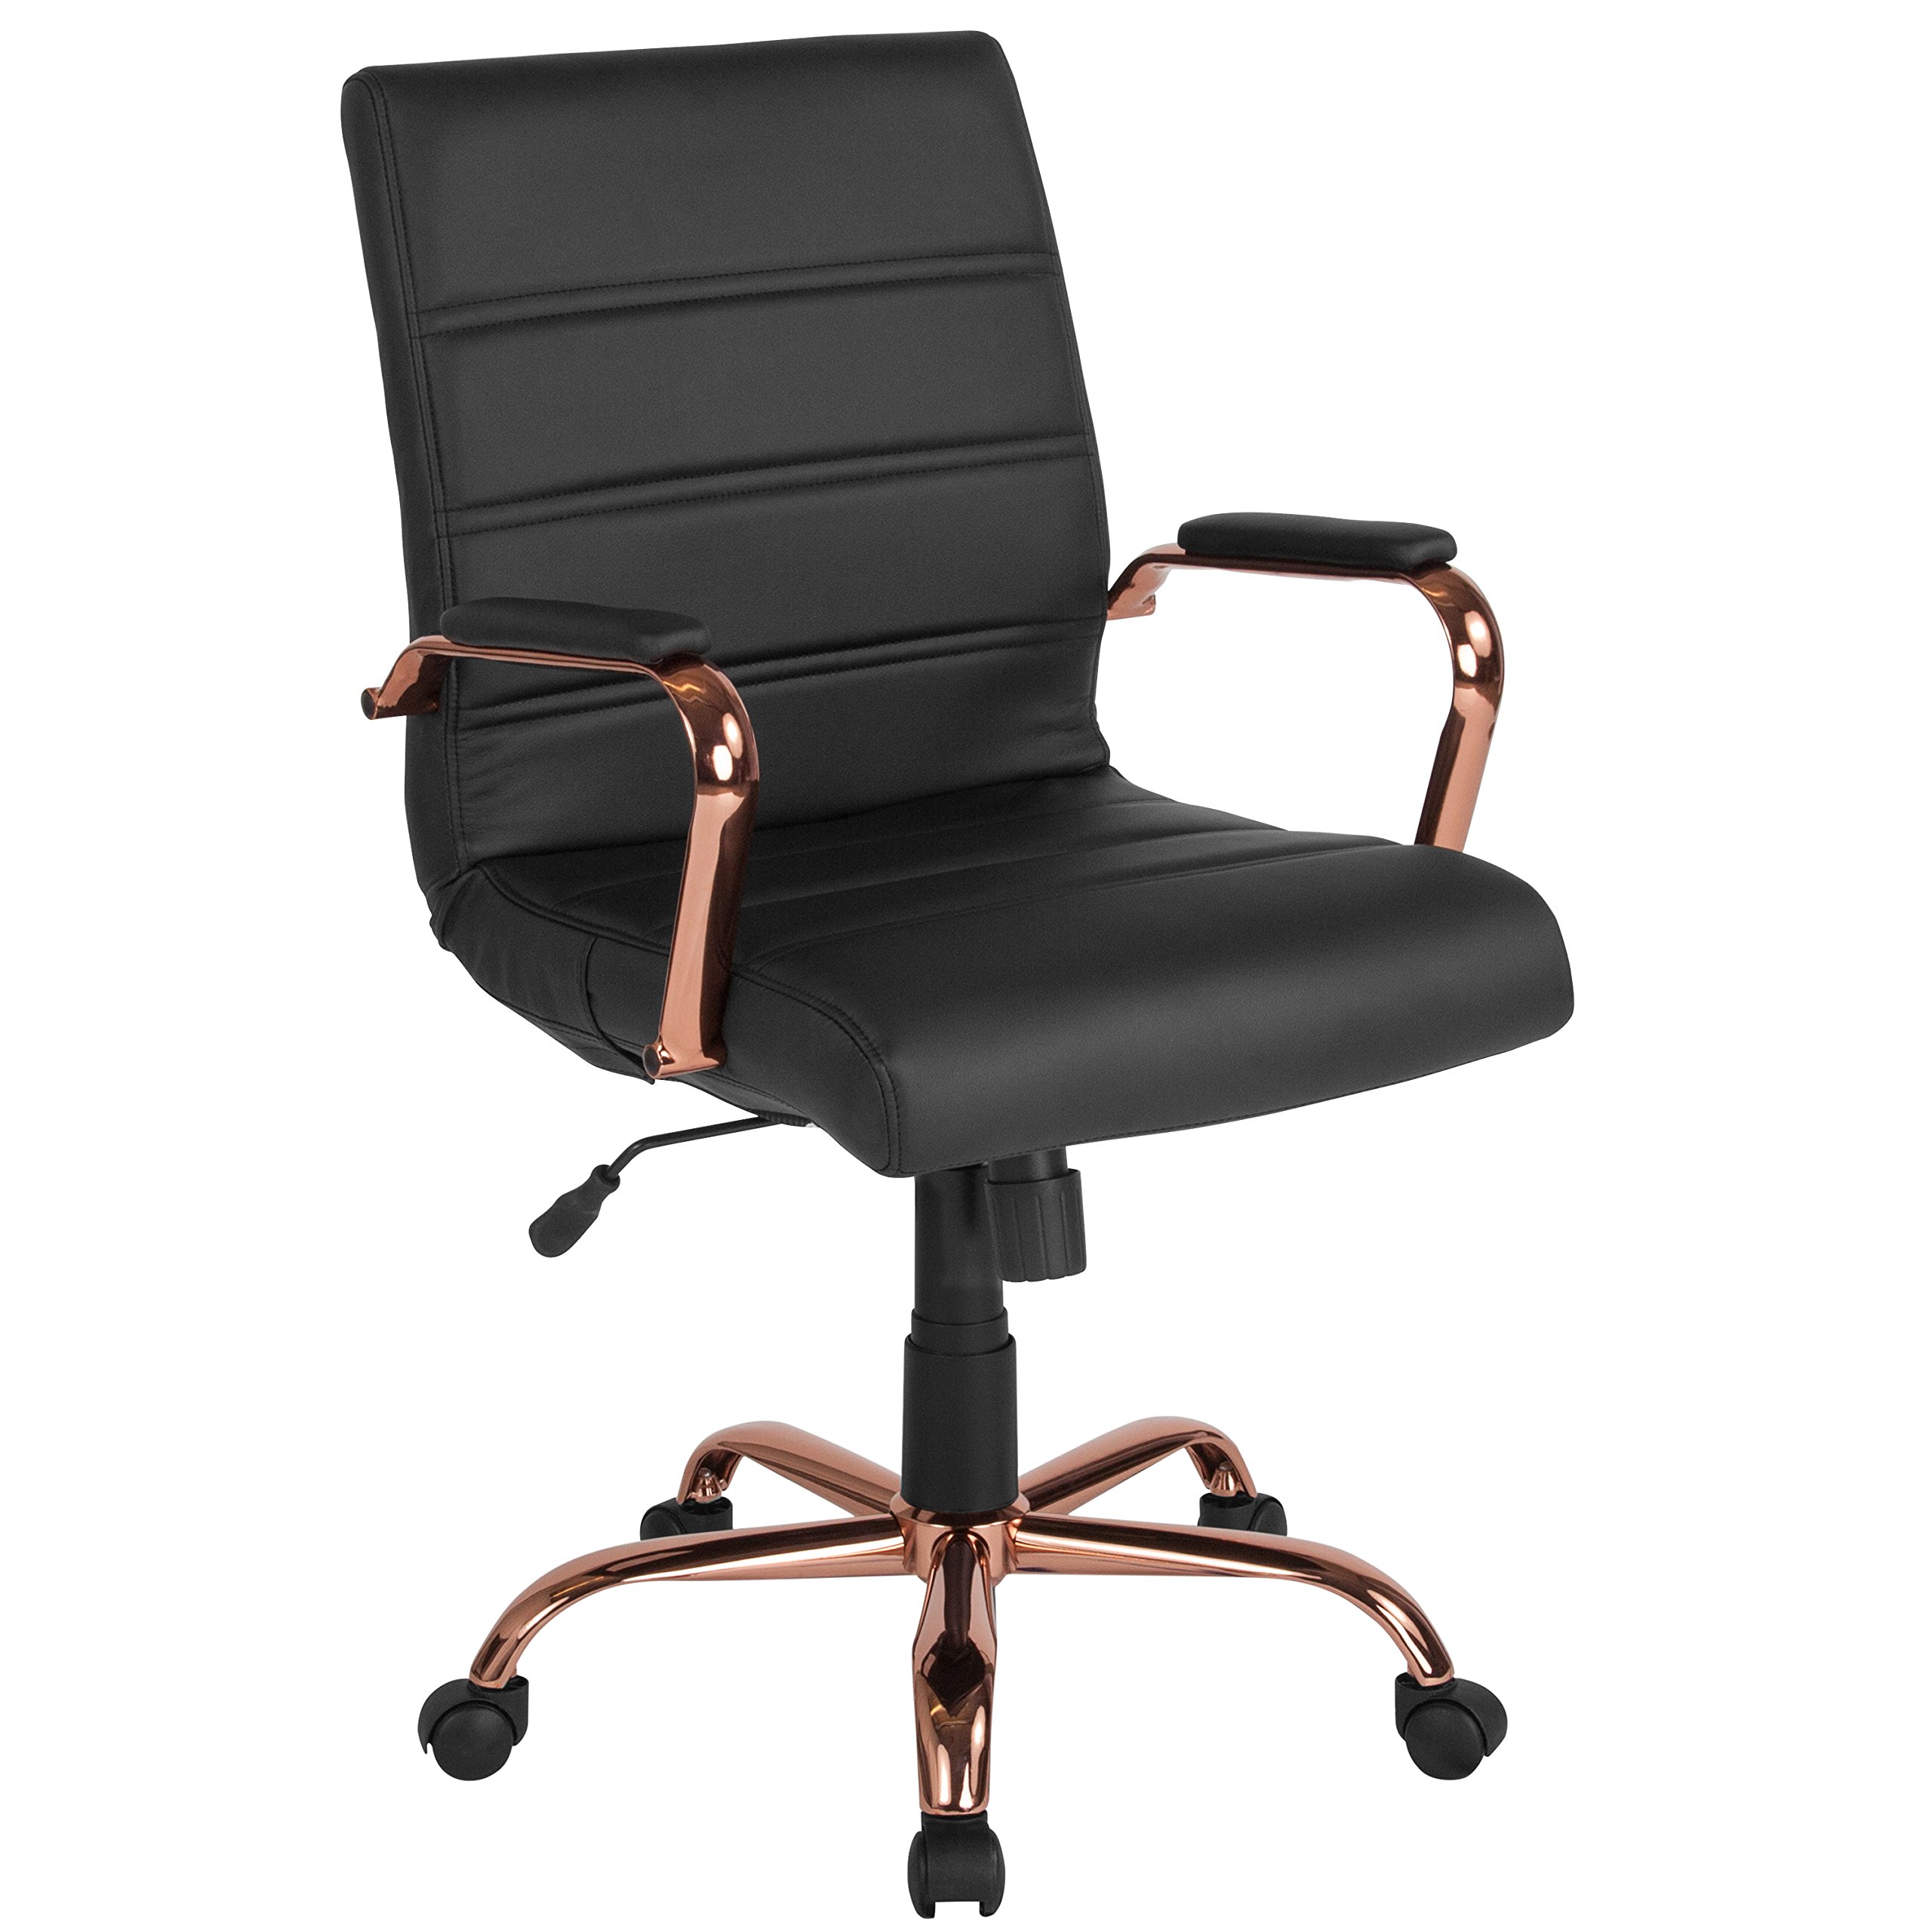 Flash Furniture كرسي مكتب منتصف الظهر - كرسي مكتب تنفيذي دوار من الجلد الأسود بإطار ذهبي وردي - كرسي بذراع دوار